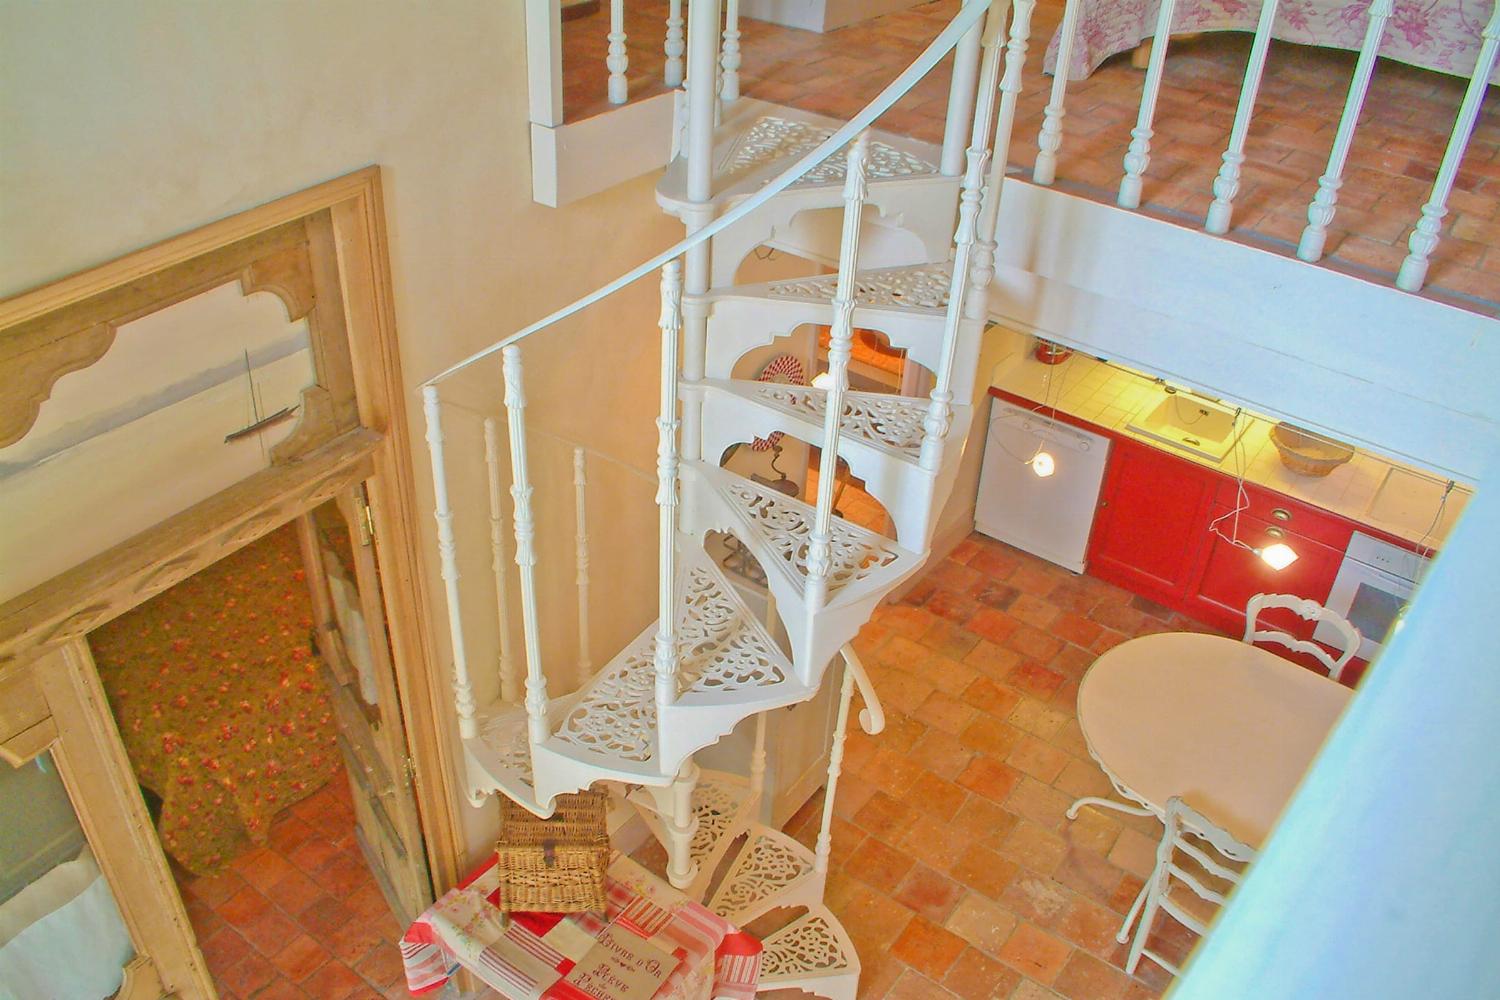 Escalier | Self-catering apartment in Pays de la Loire